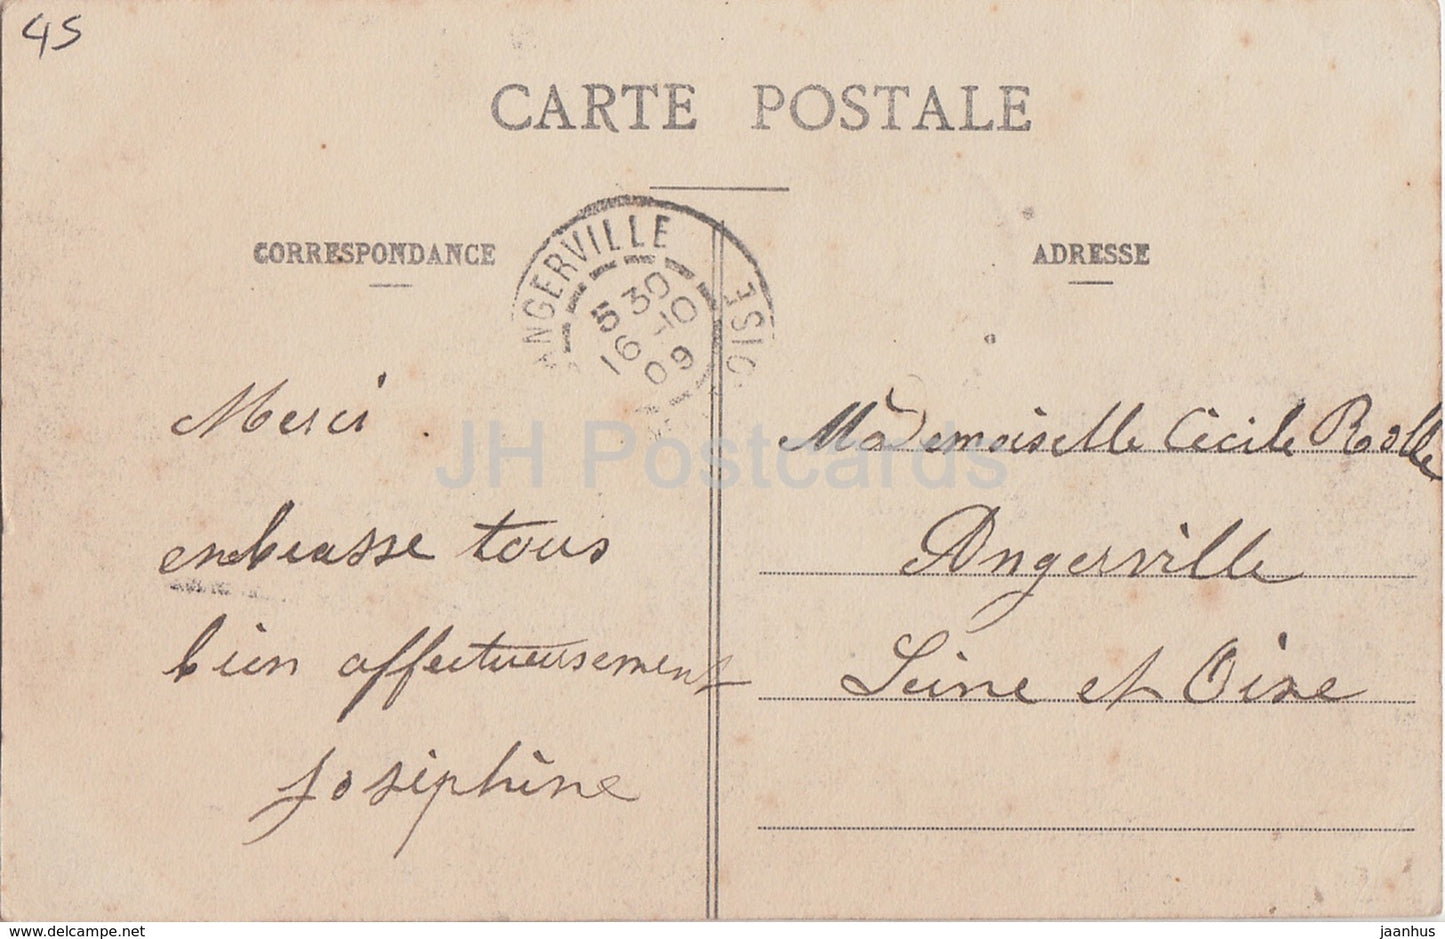 Chateau de Bellegarde - Pavillon de la Surintendance - castle - old postcard - 1909 - France - used